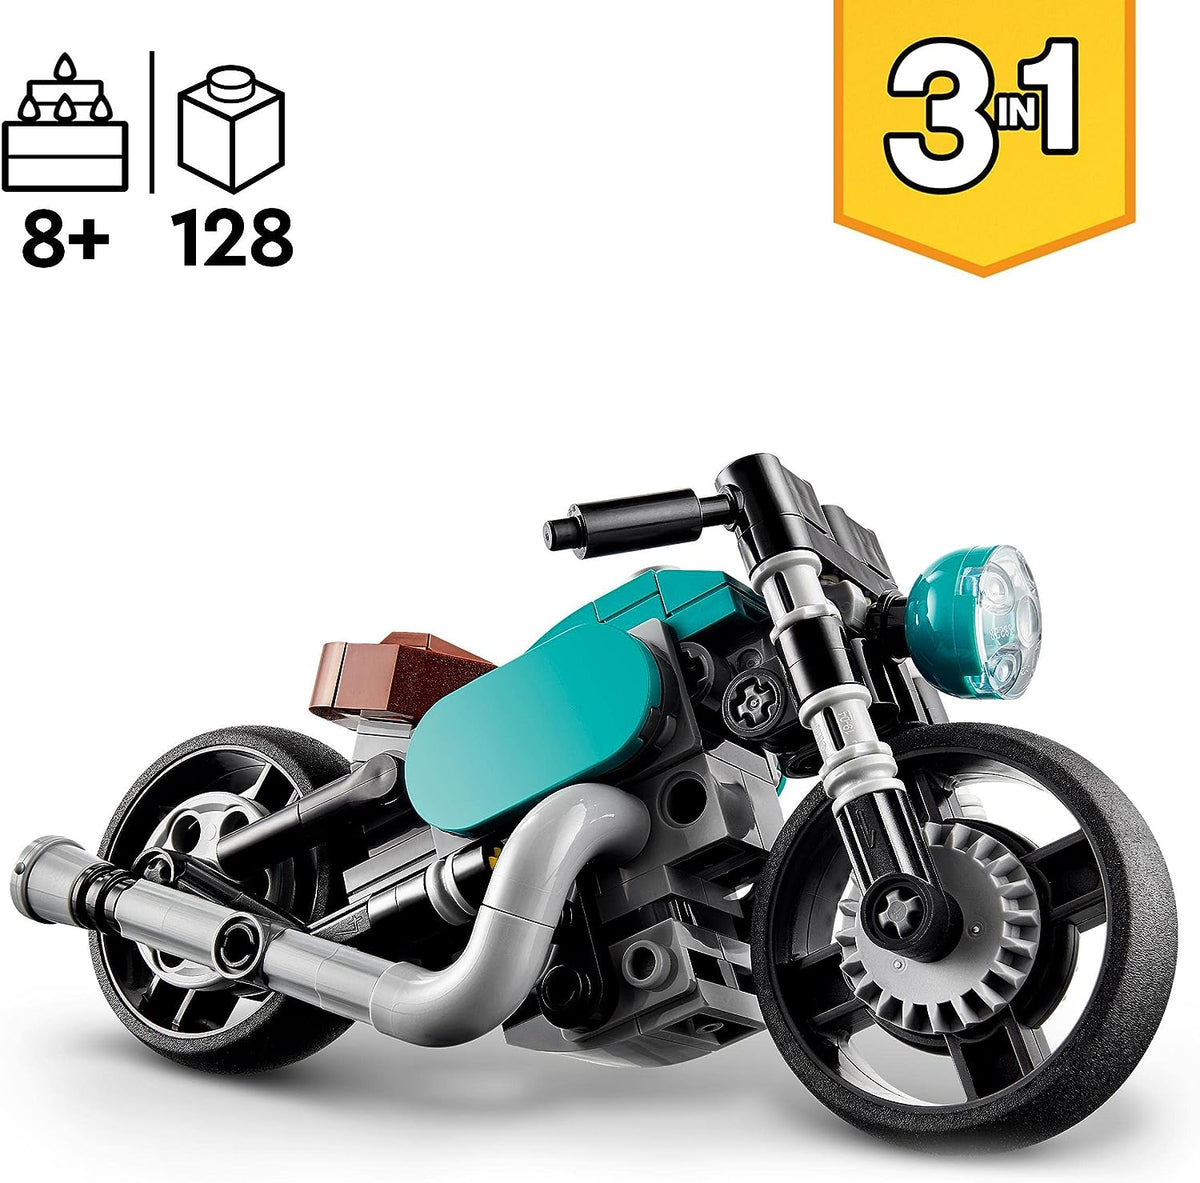 LEGO Creator 3-in-1 Vintage Motorcycle Building Set 31135